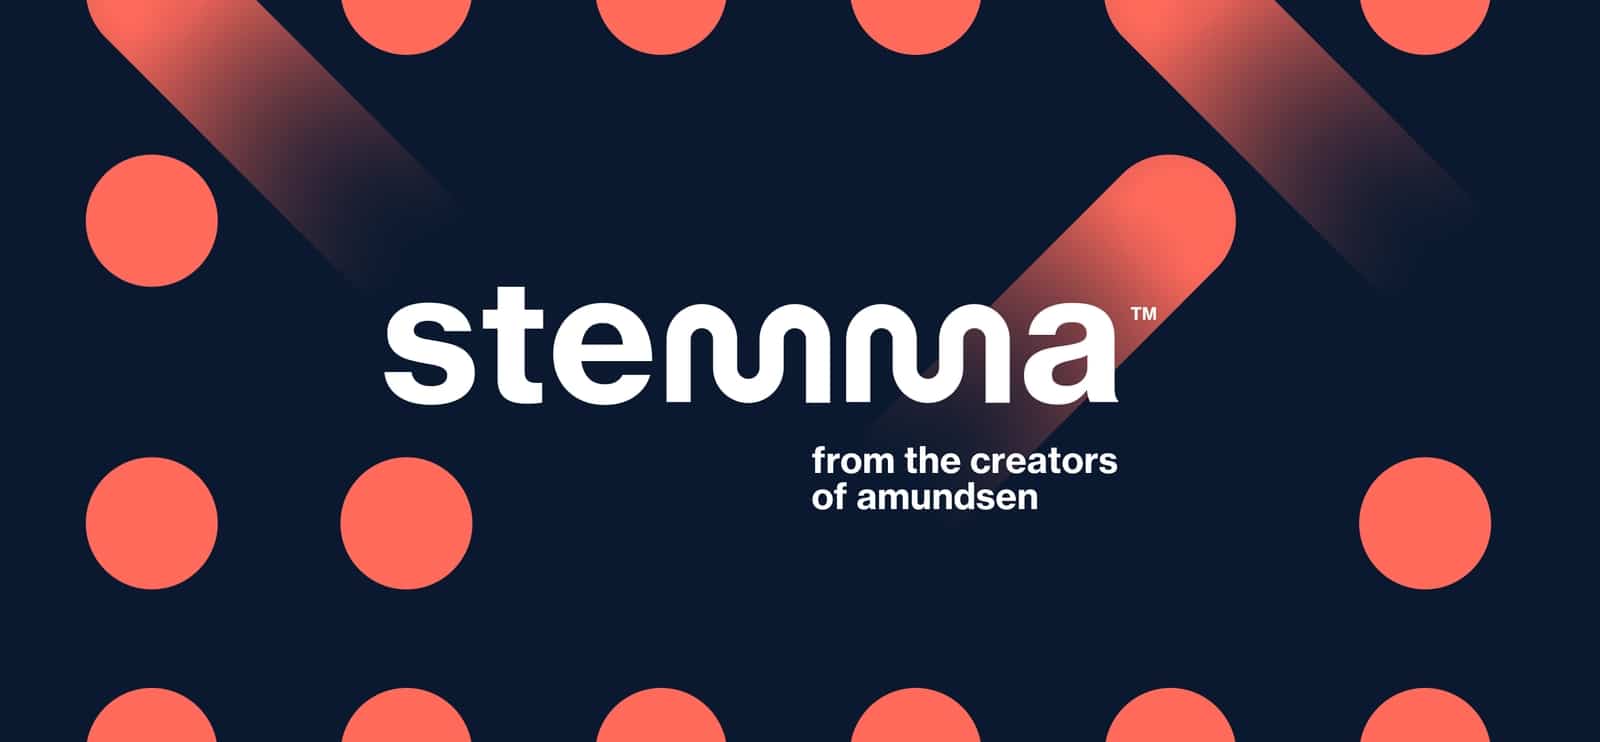 Stemma logo